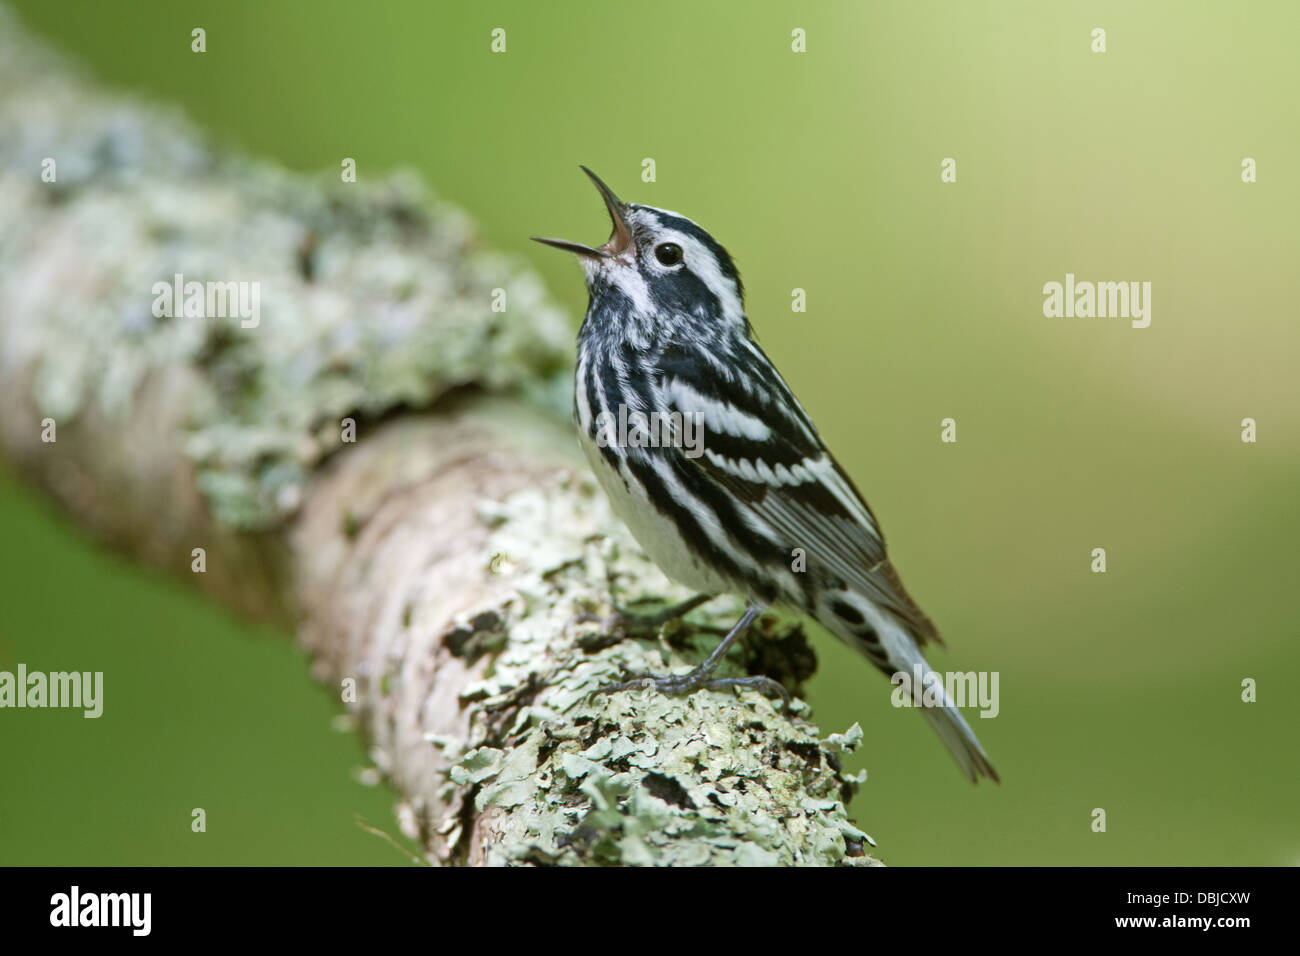 Black and White Warbler cantando perchando en Lichen Cubiertos Log Foto de stock